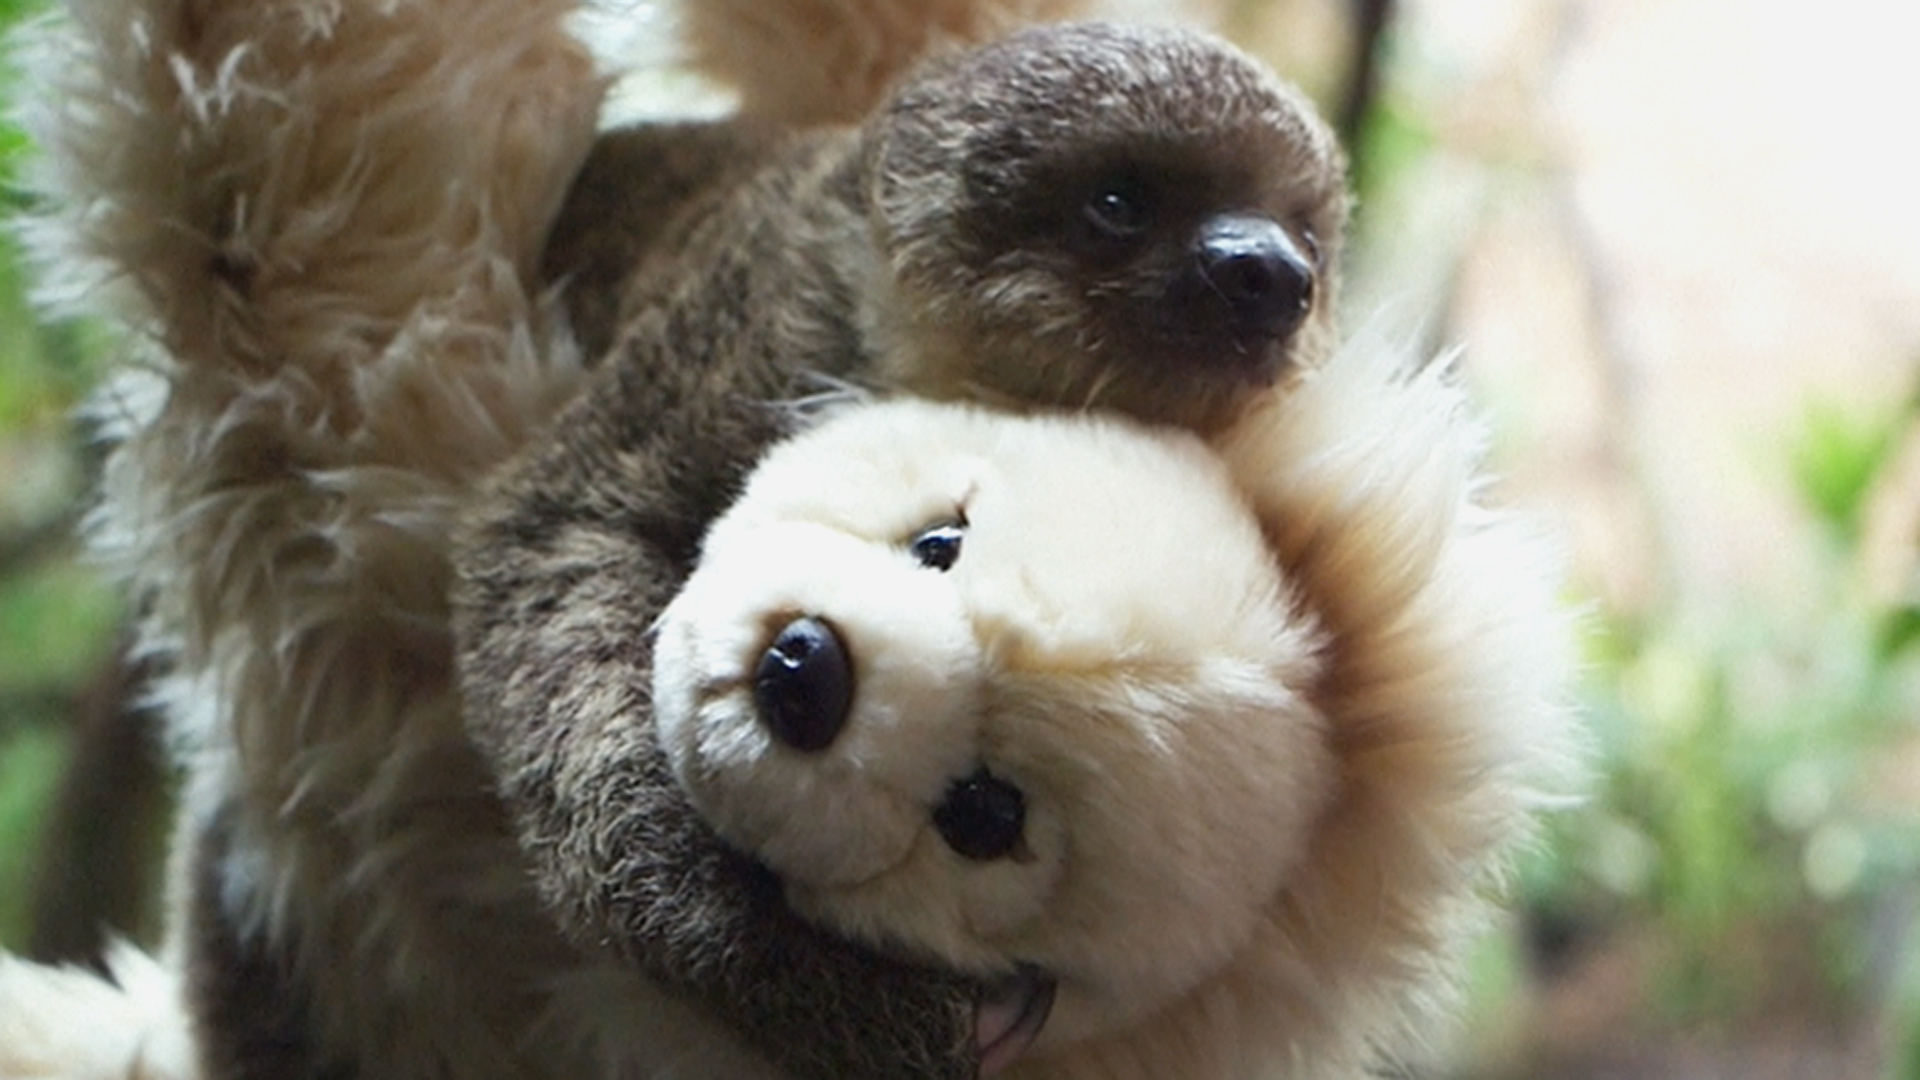 Baby Sloth Has Teddy Bear as a Surrogate Mother - NBC News
